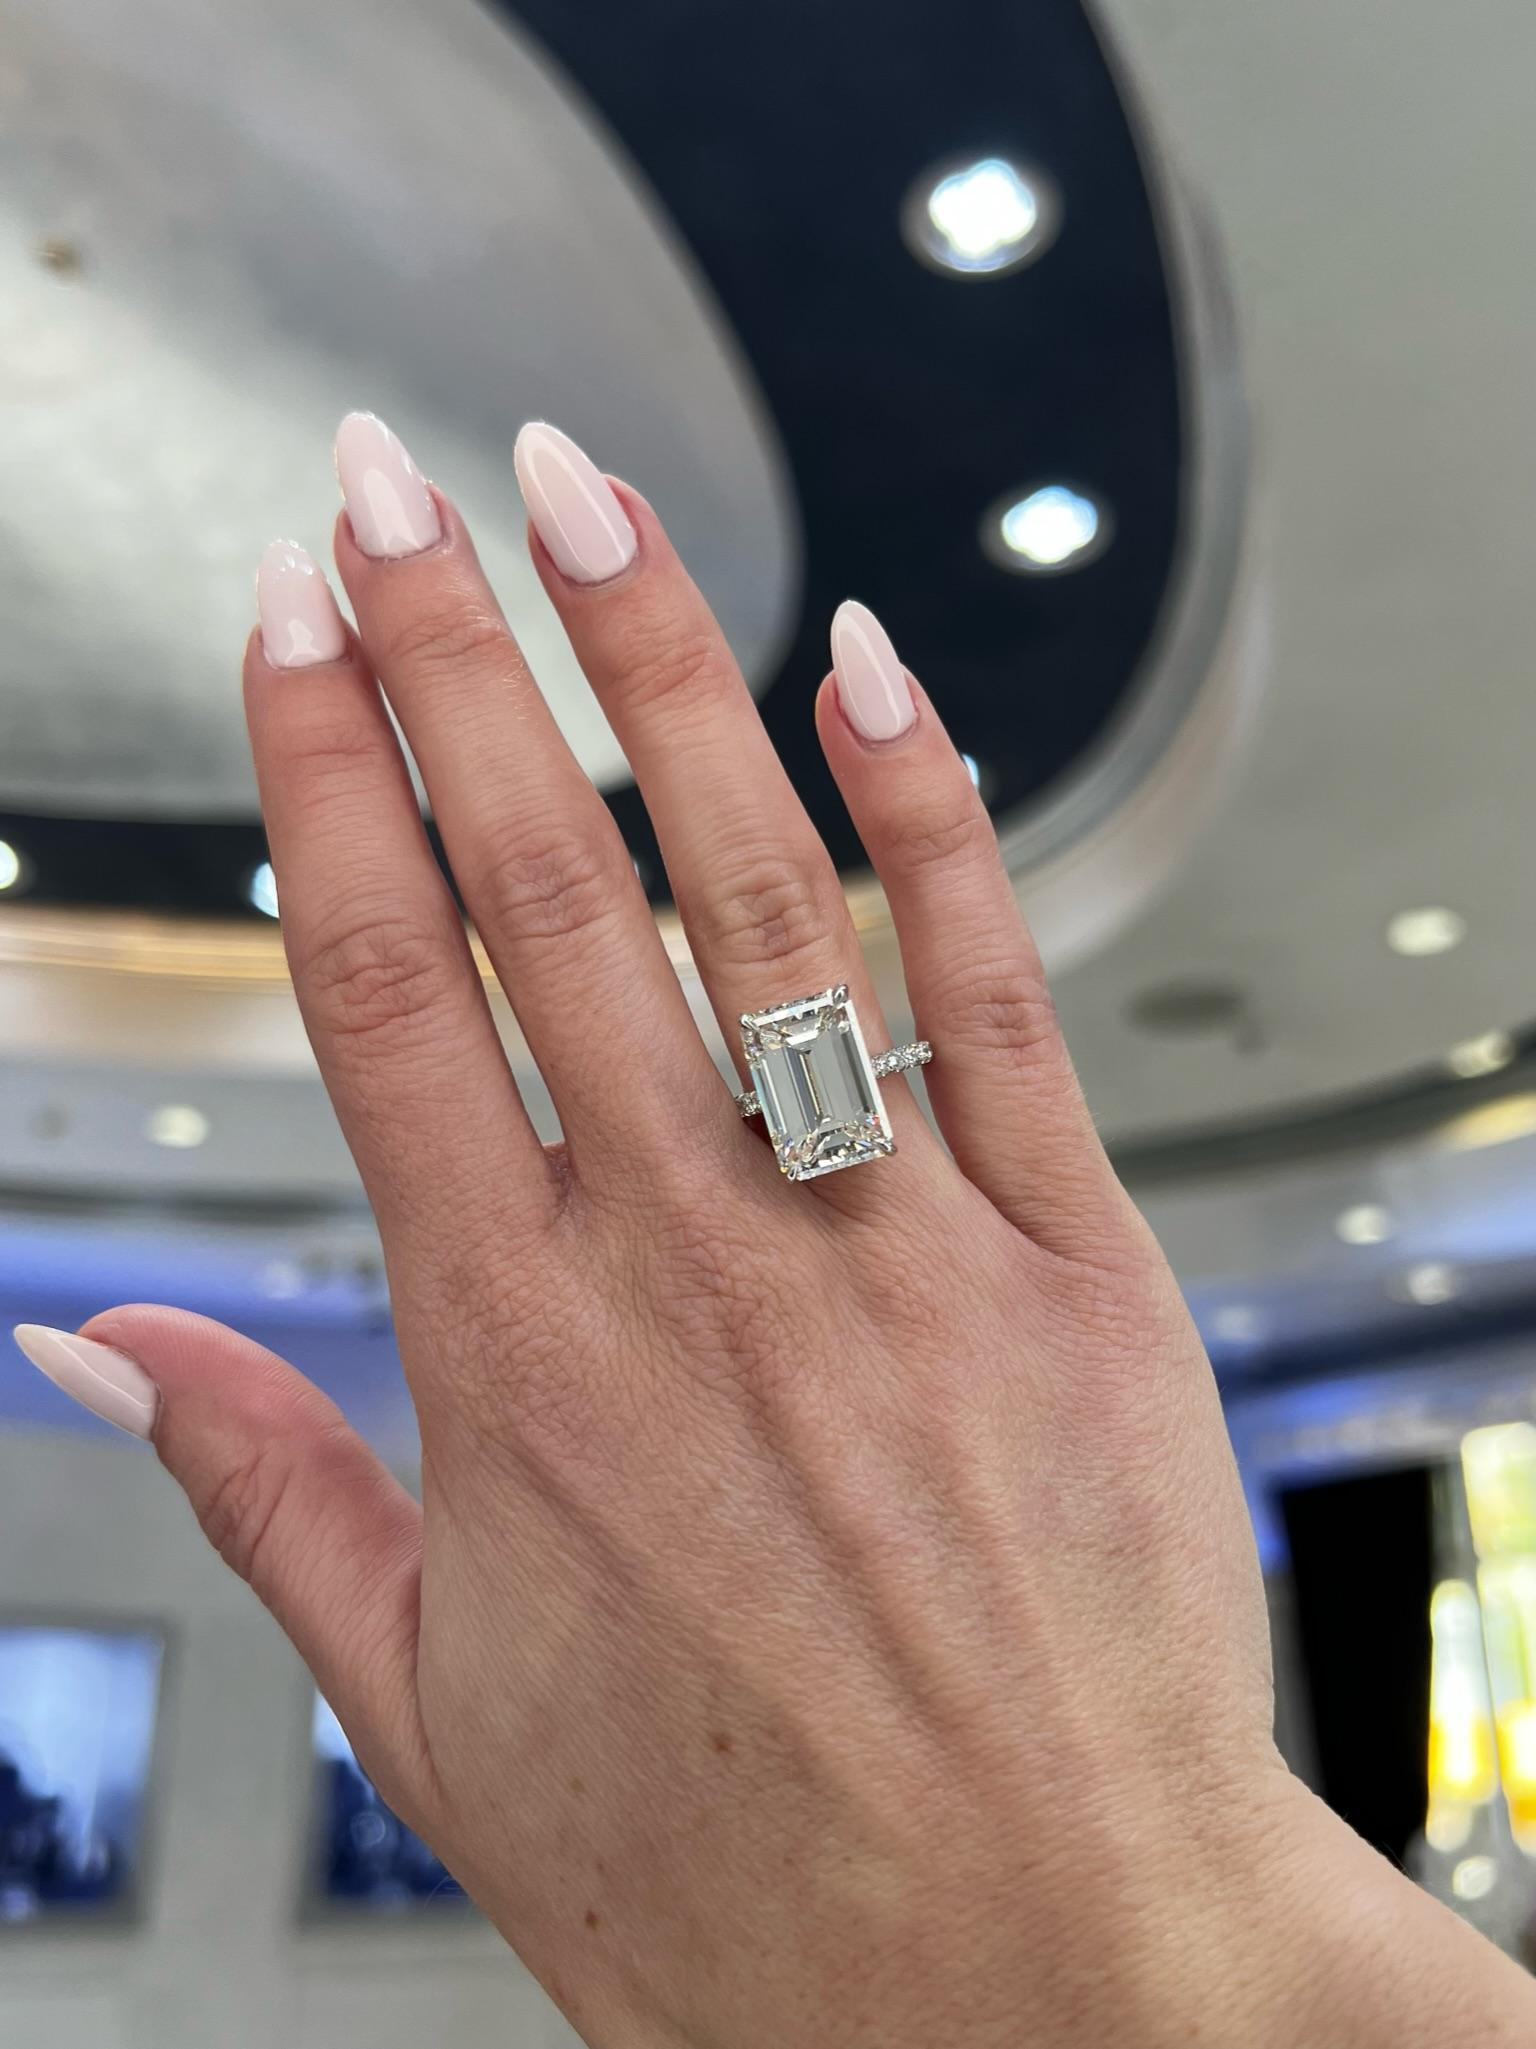 David Rosenberg 10.86 Carat Emerald Cut I VS2 GIA Diamond Engagement Ring For Sale 4